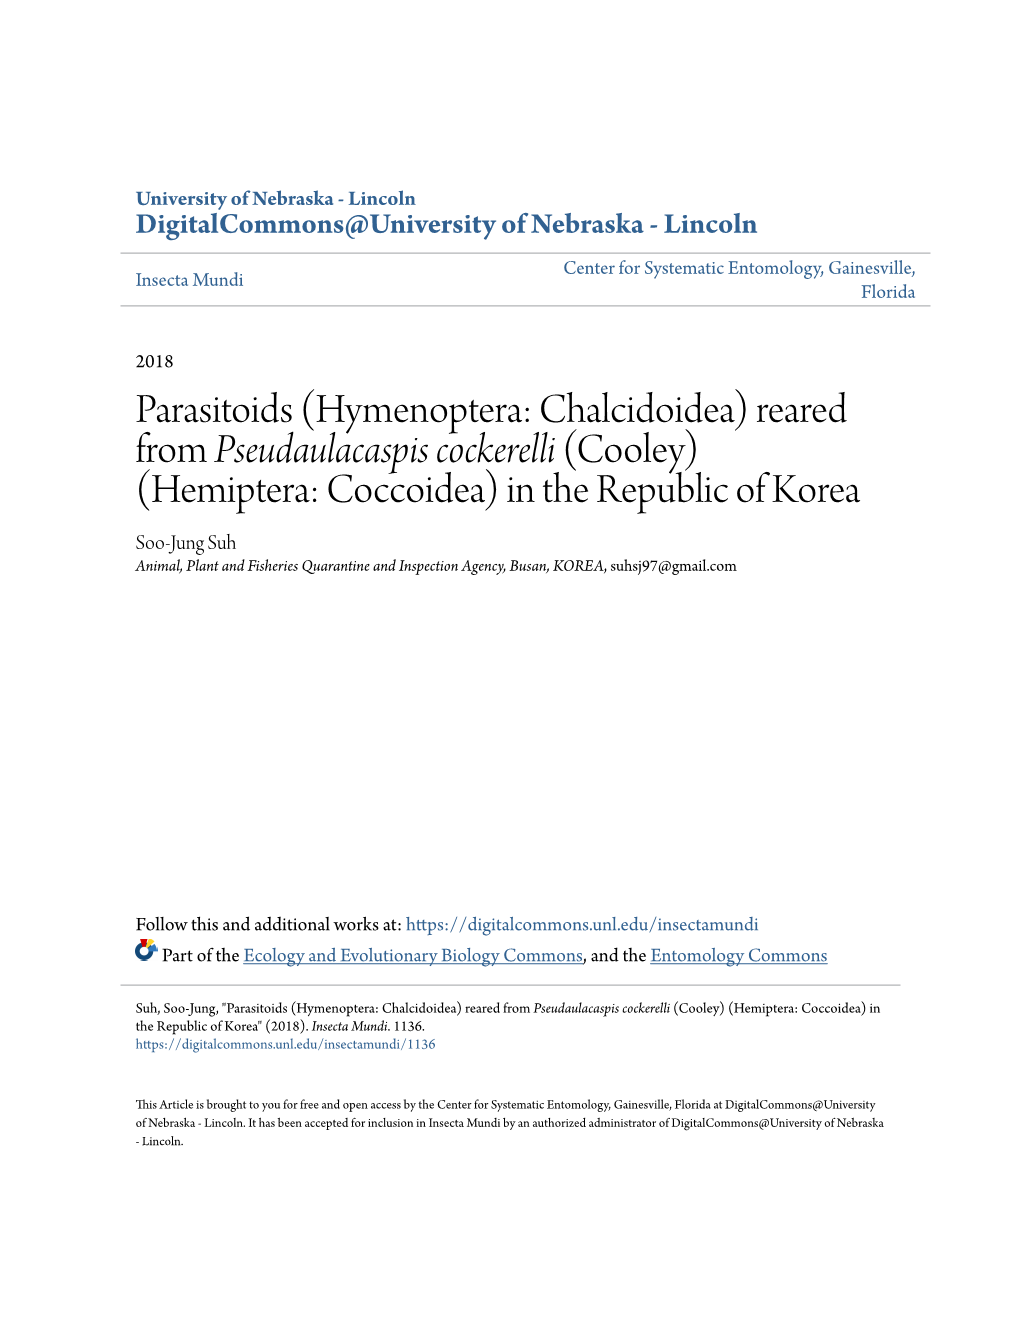 (Hymenoptera: Chalcidoidea) Reared from Pseudaulacaspis Cockerelli